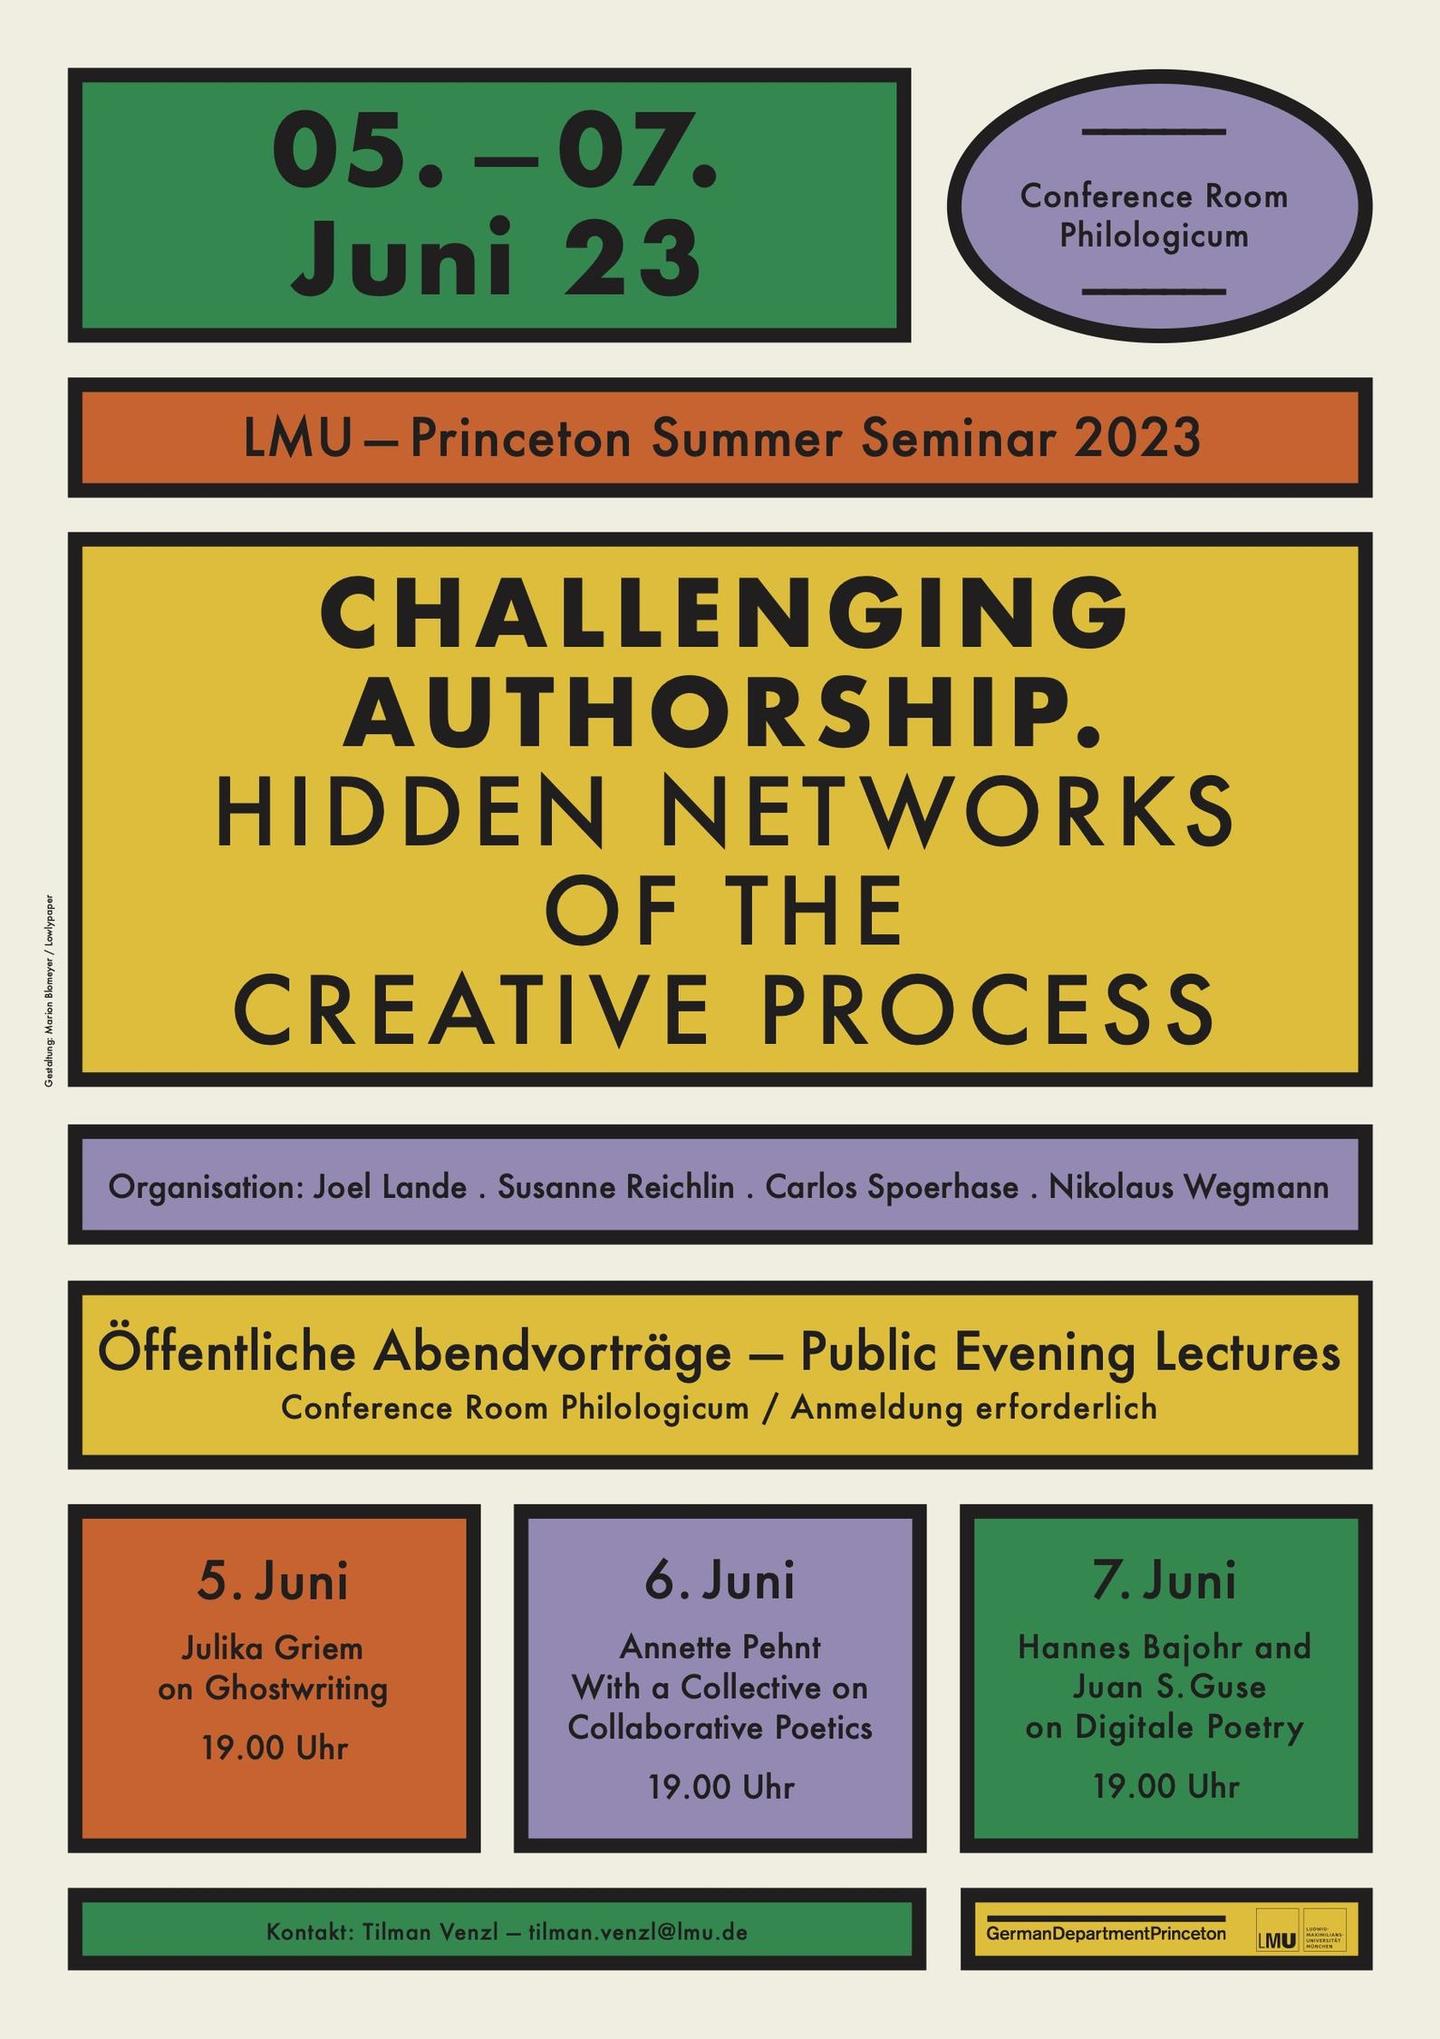 LMU-Princeton Summer Seminar 2023